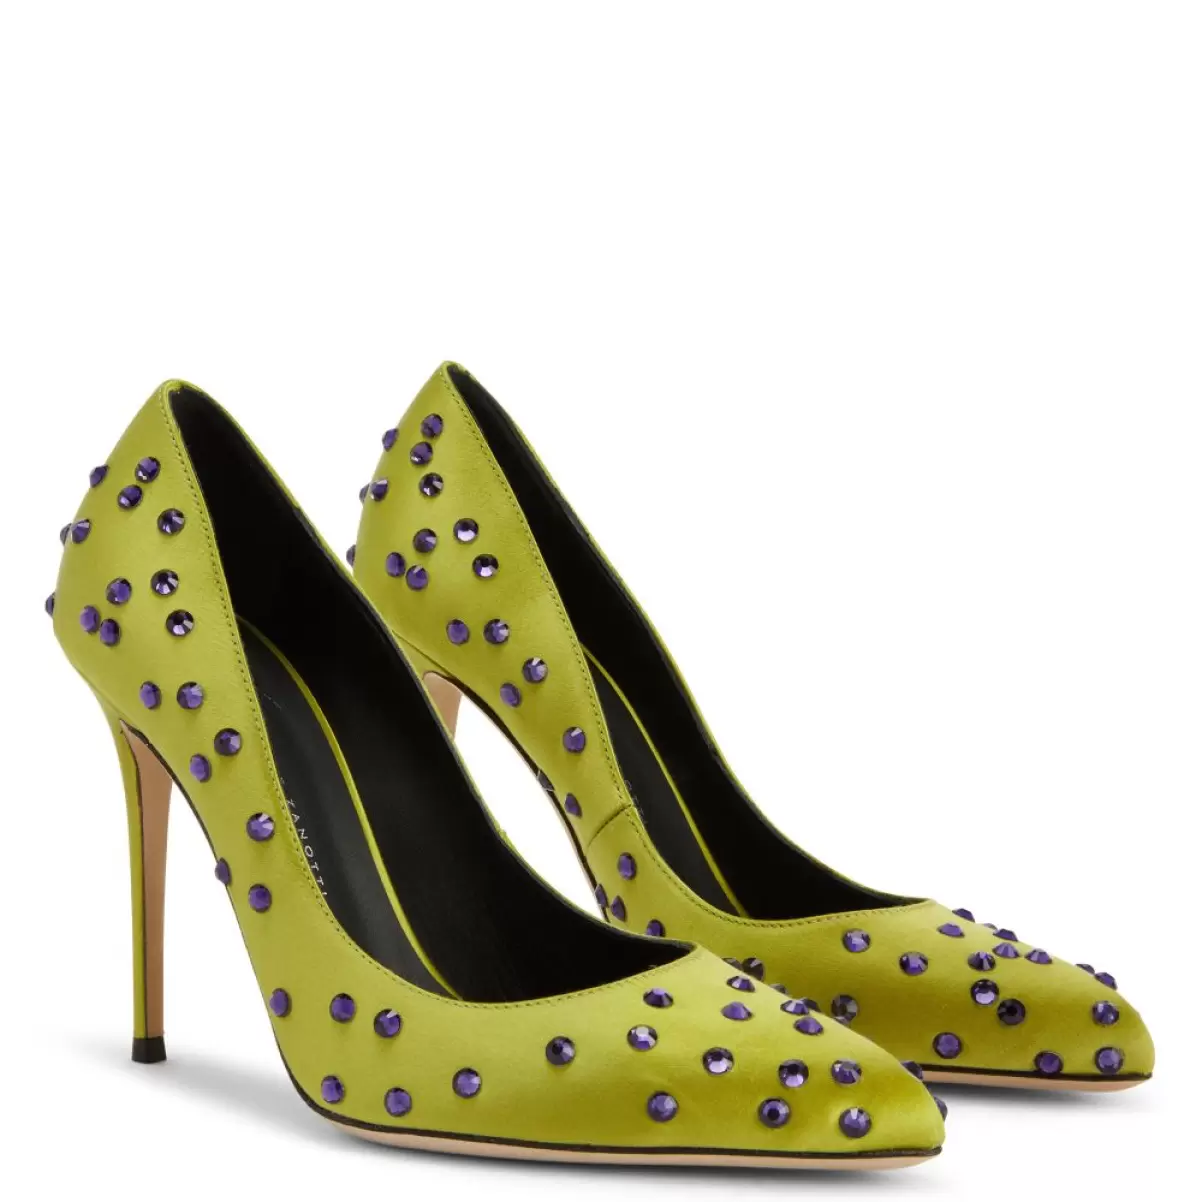 Jakye Precious Zapatos De Salón Giuseppe Zanotti Mujer Verde - 2